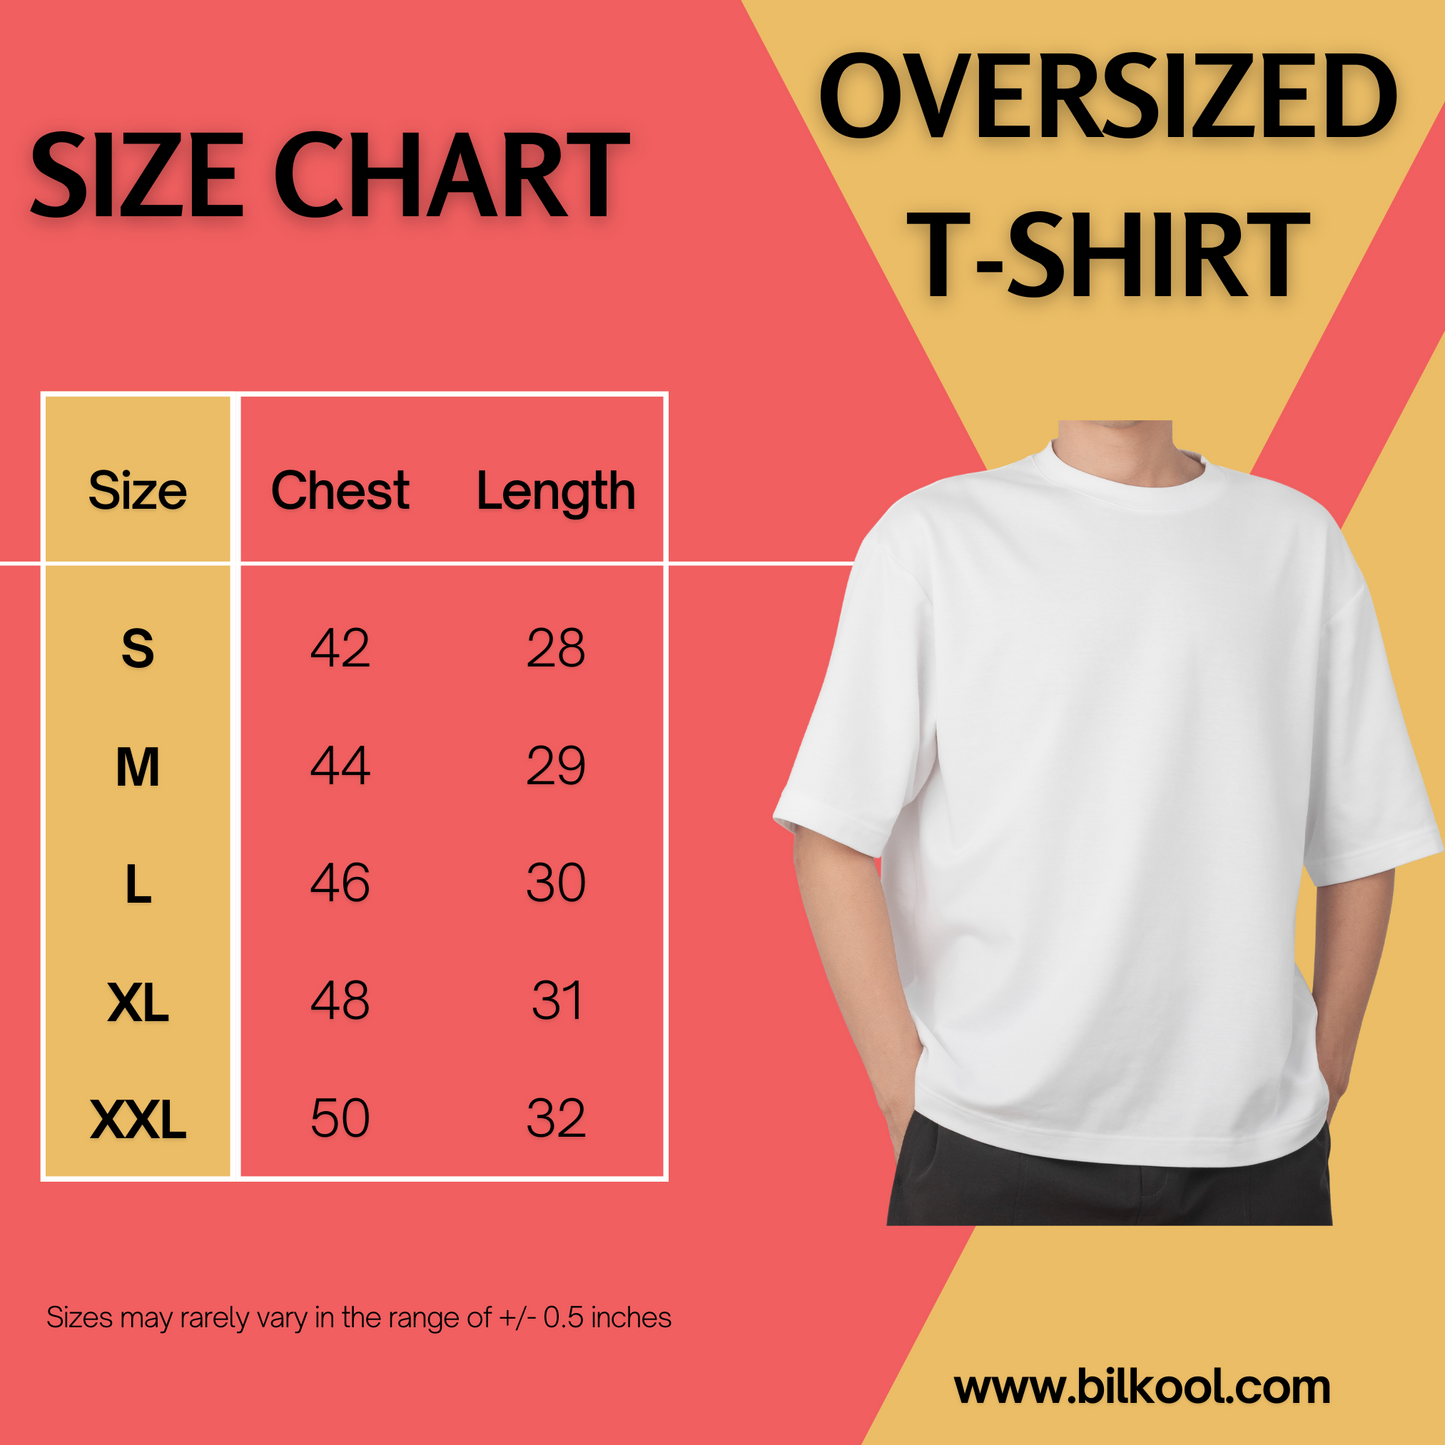 Corporat Great Ideas Here Oversized T-Shirt